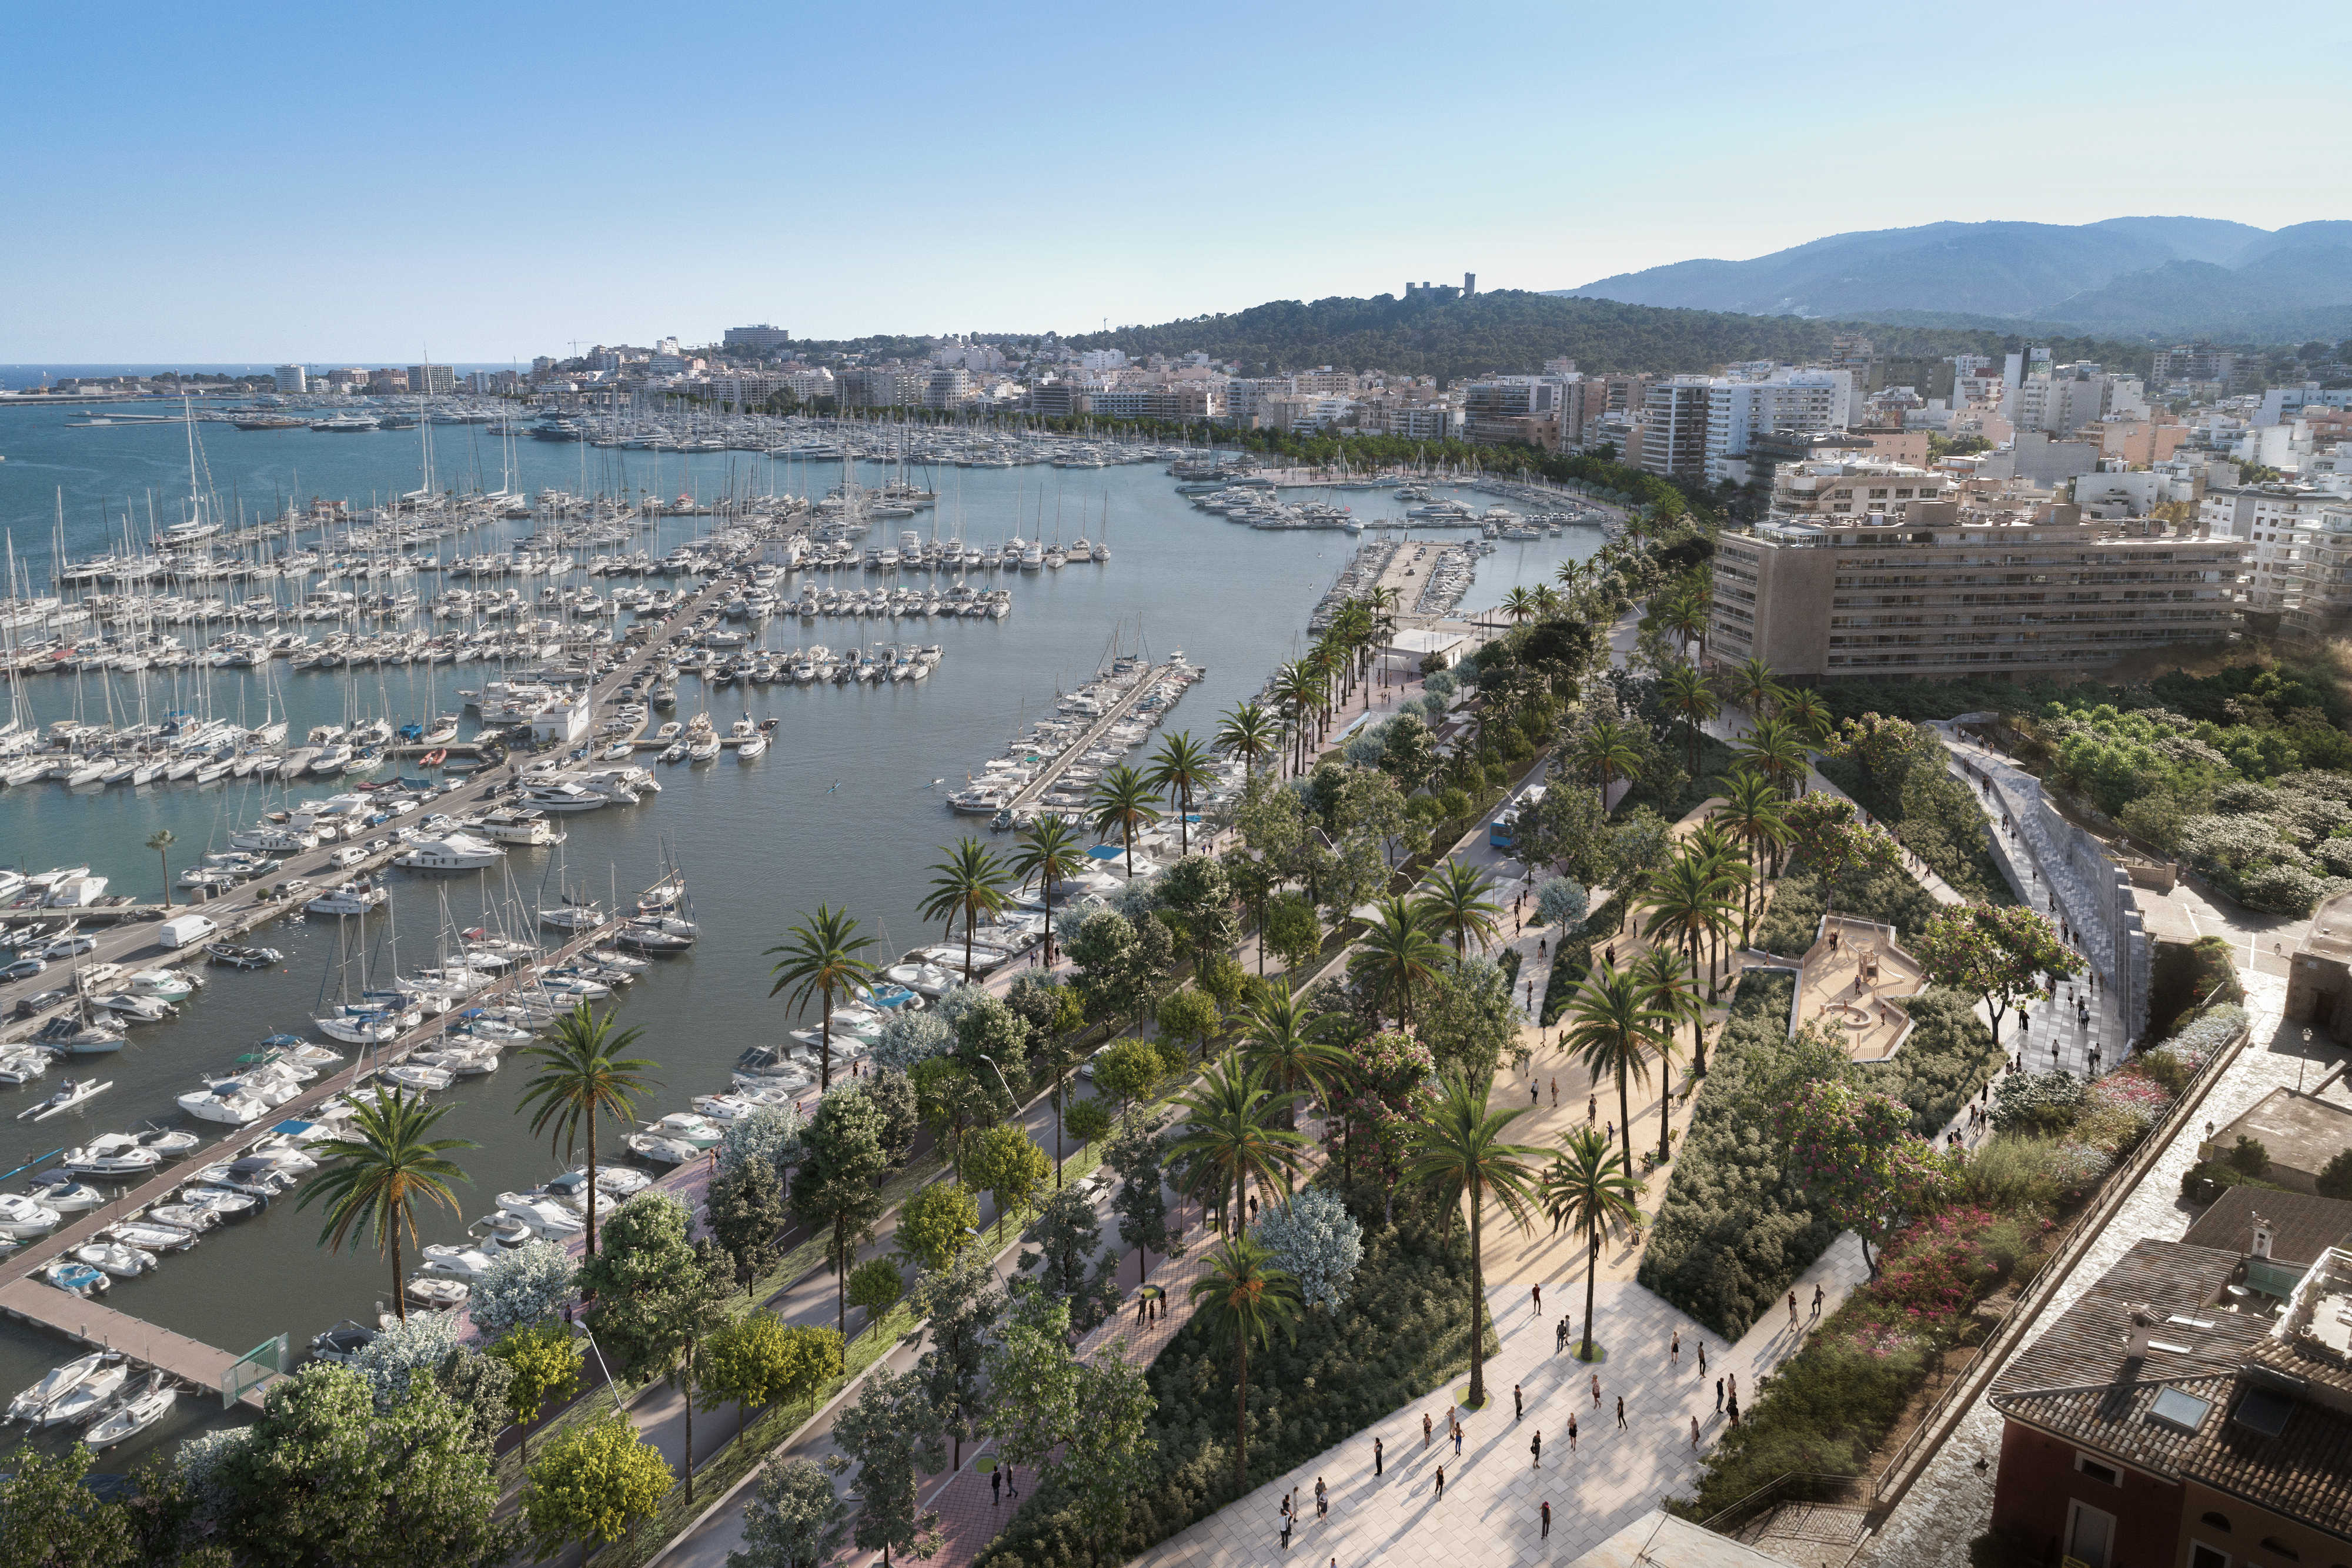 Work on Palma’s new promenade will begin on 18 November